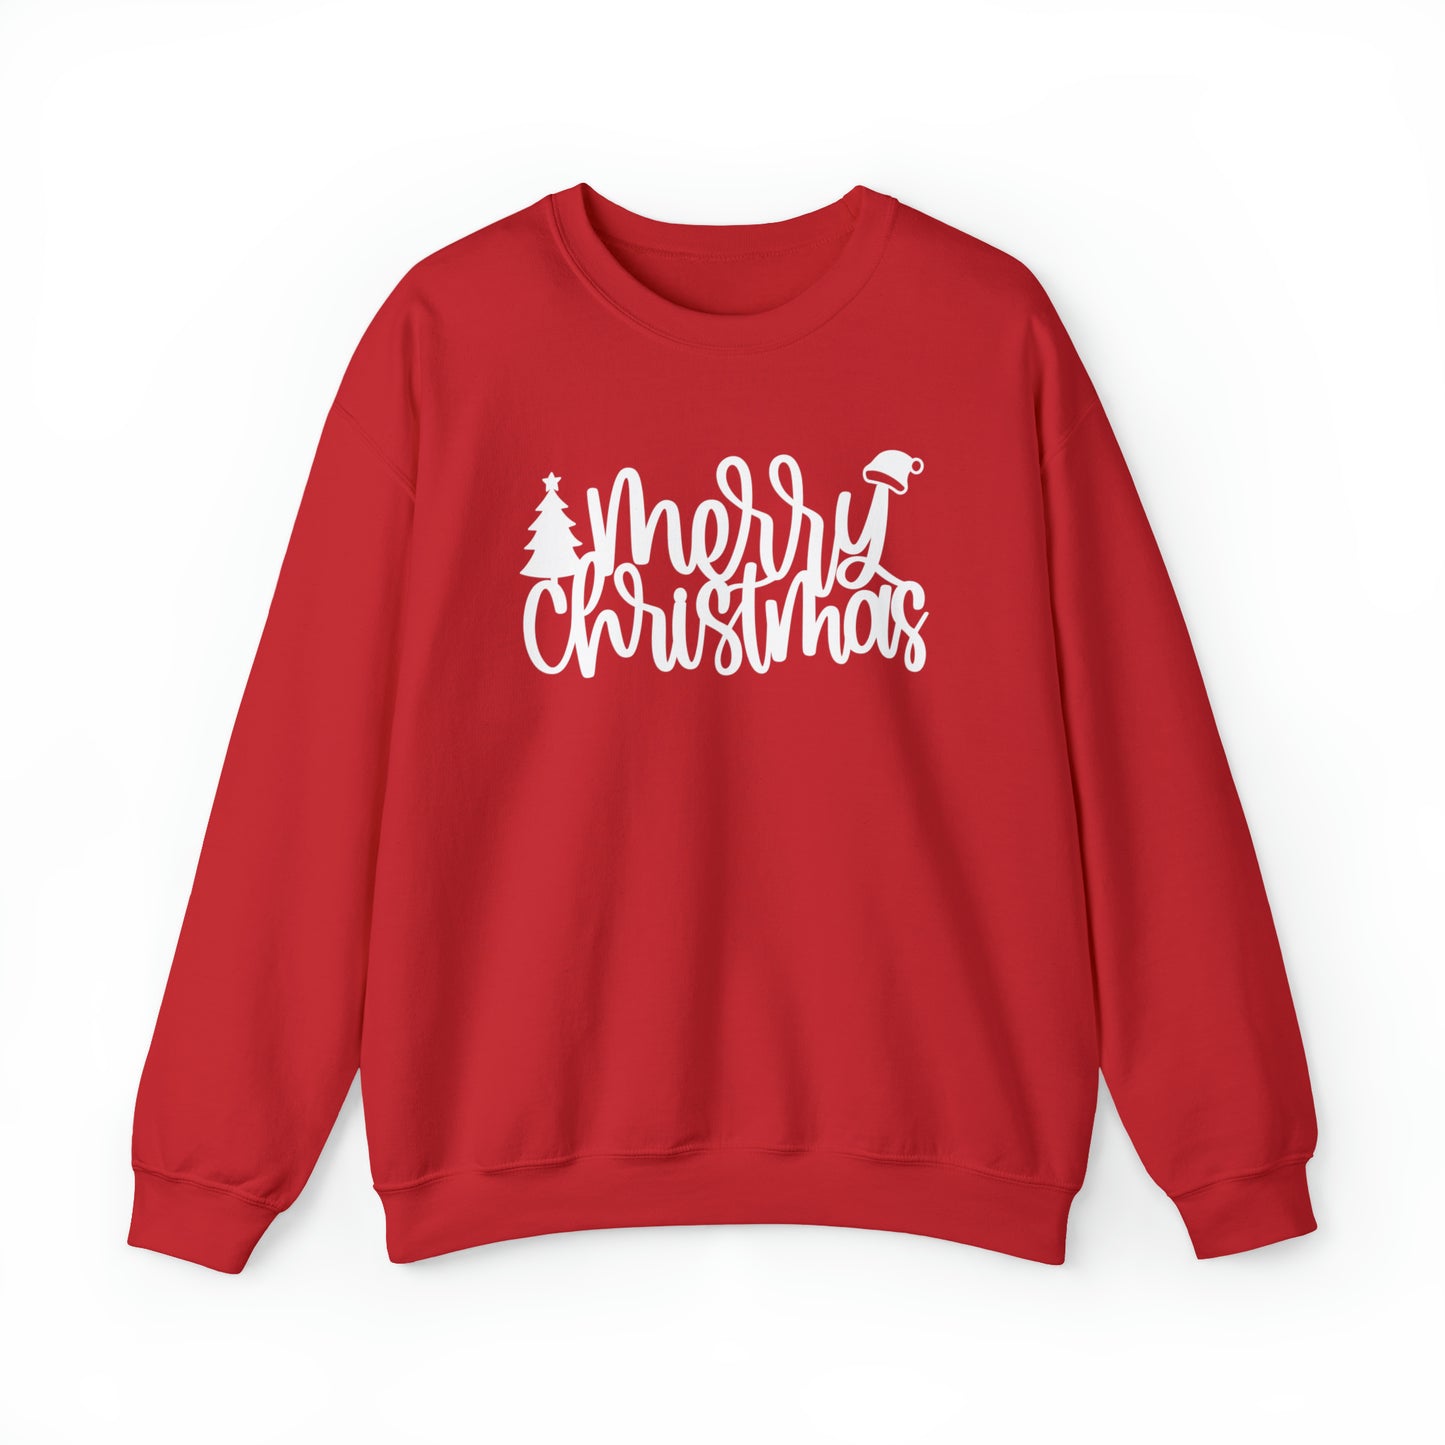 Merry Christmas Crewneck Sweater